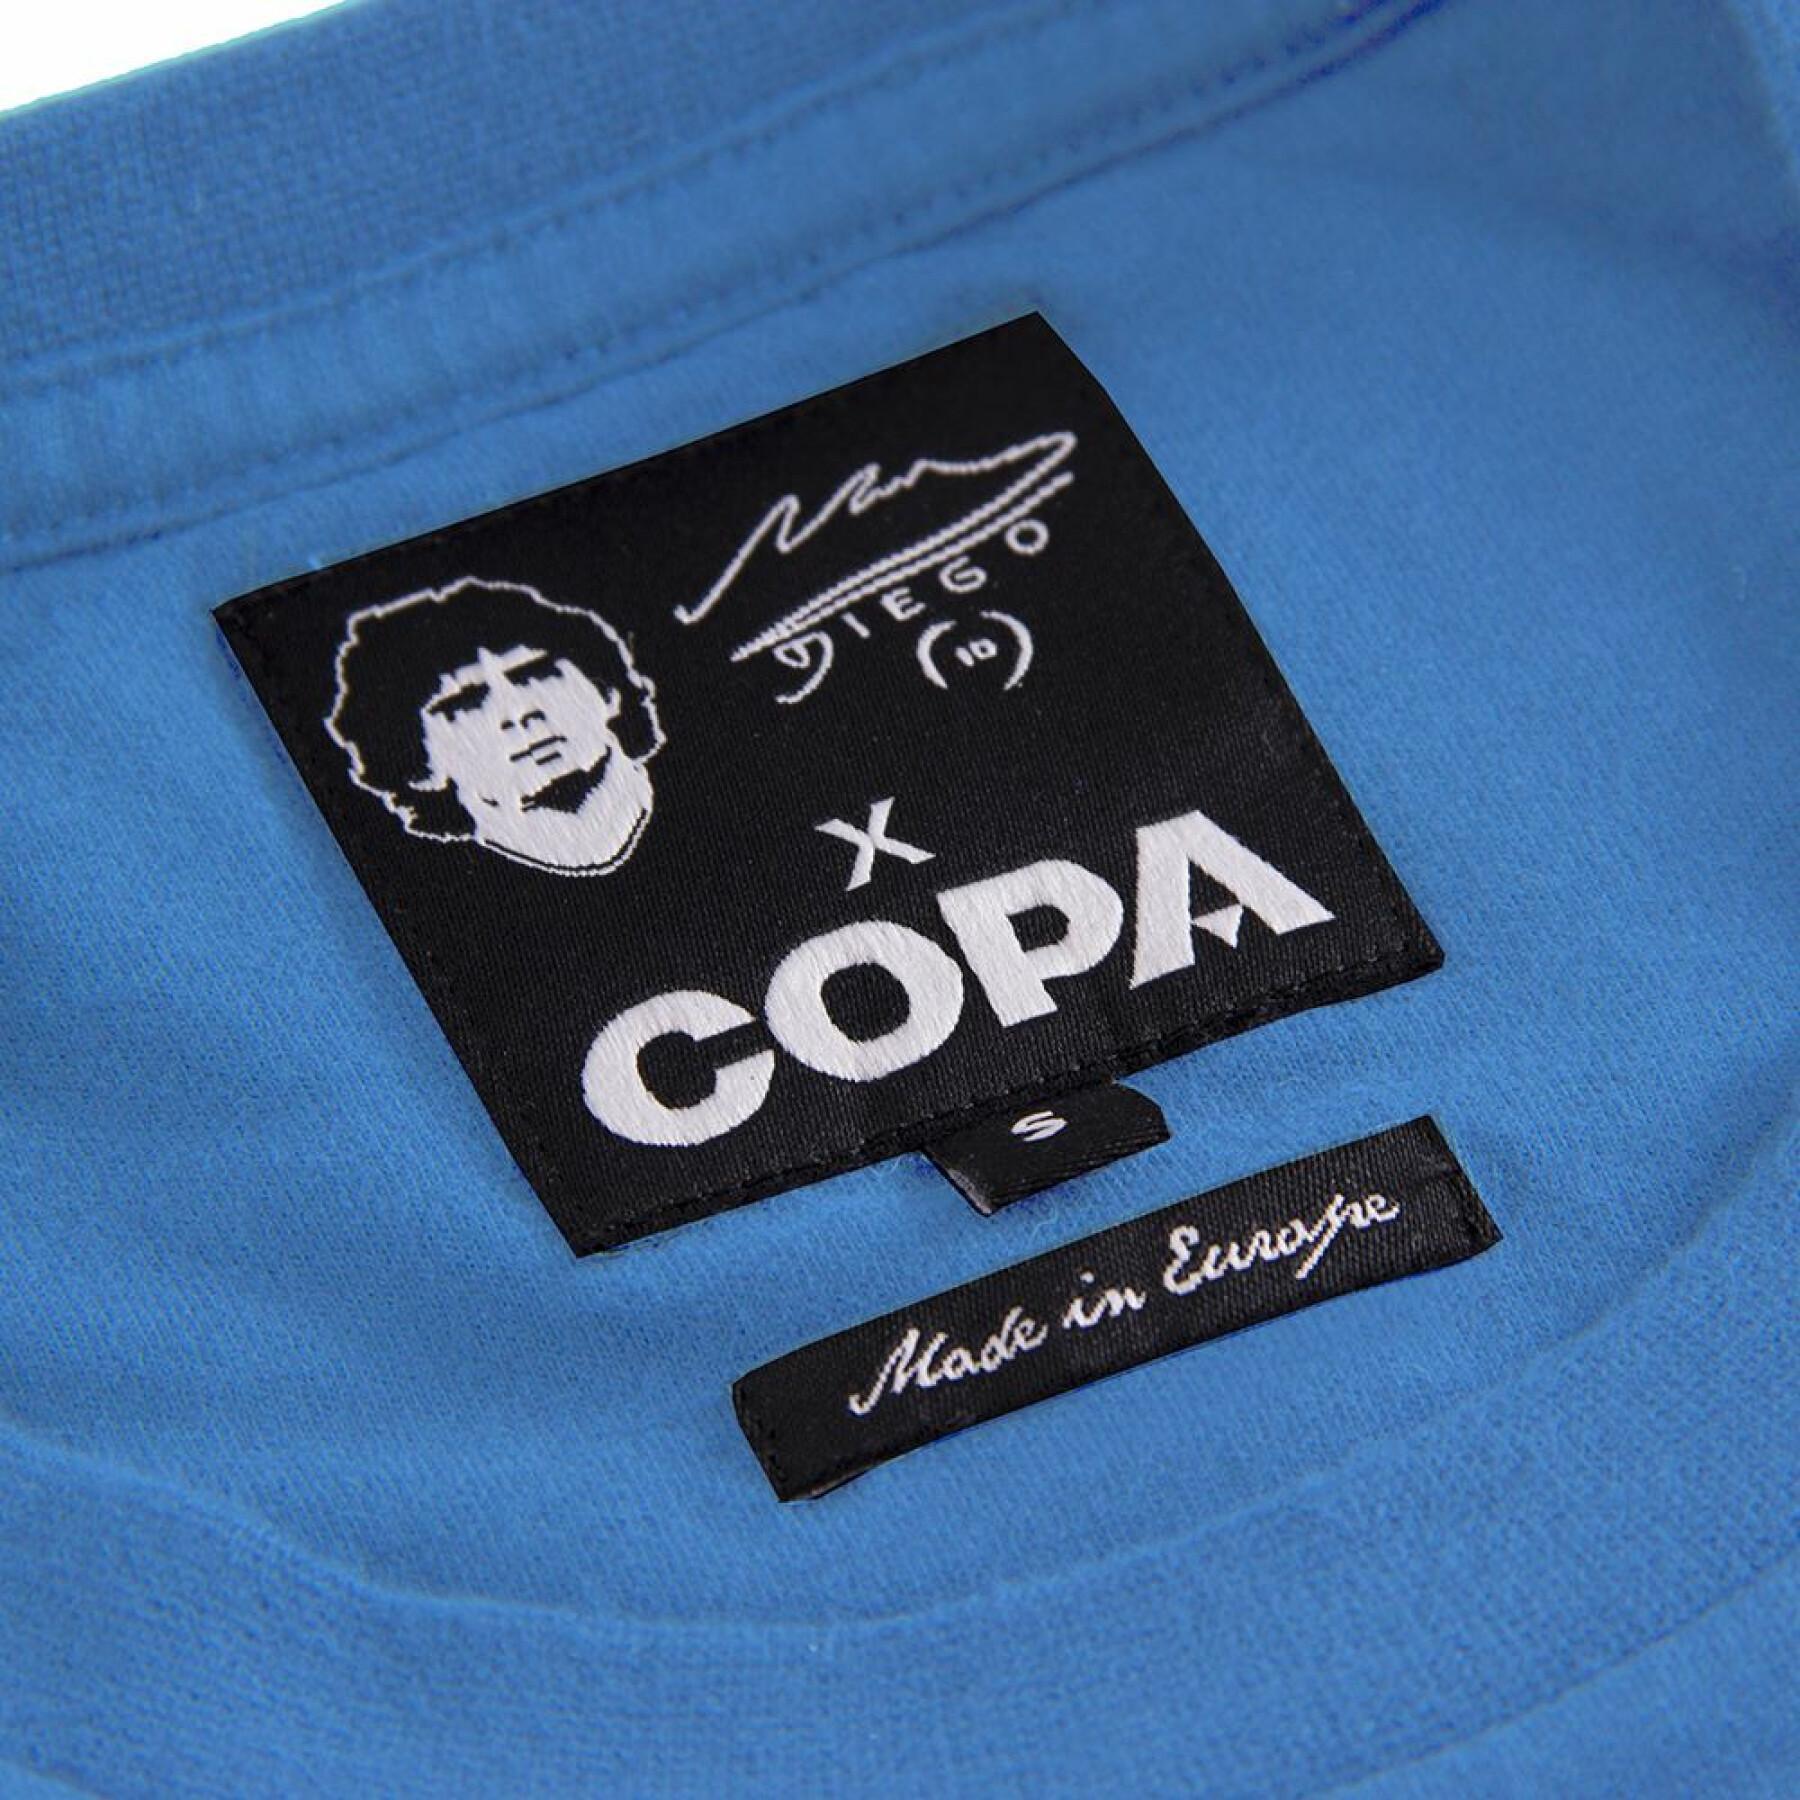 T-shirt brodé Copa SSC Napoli Maradona